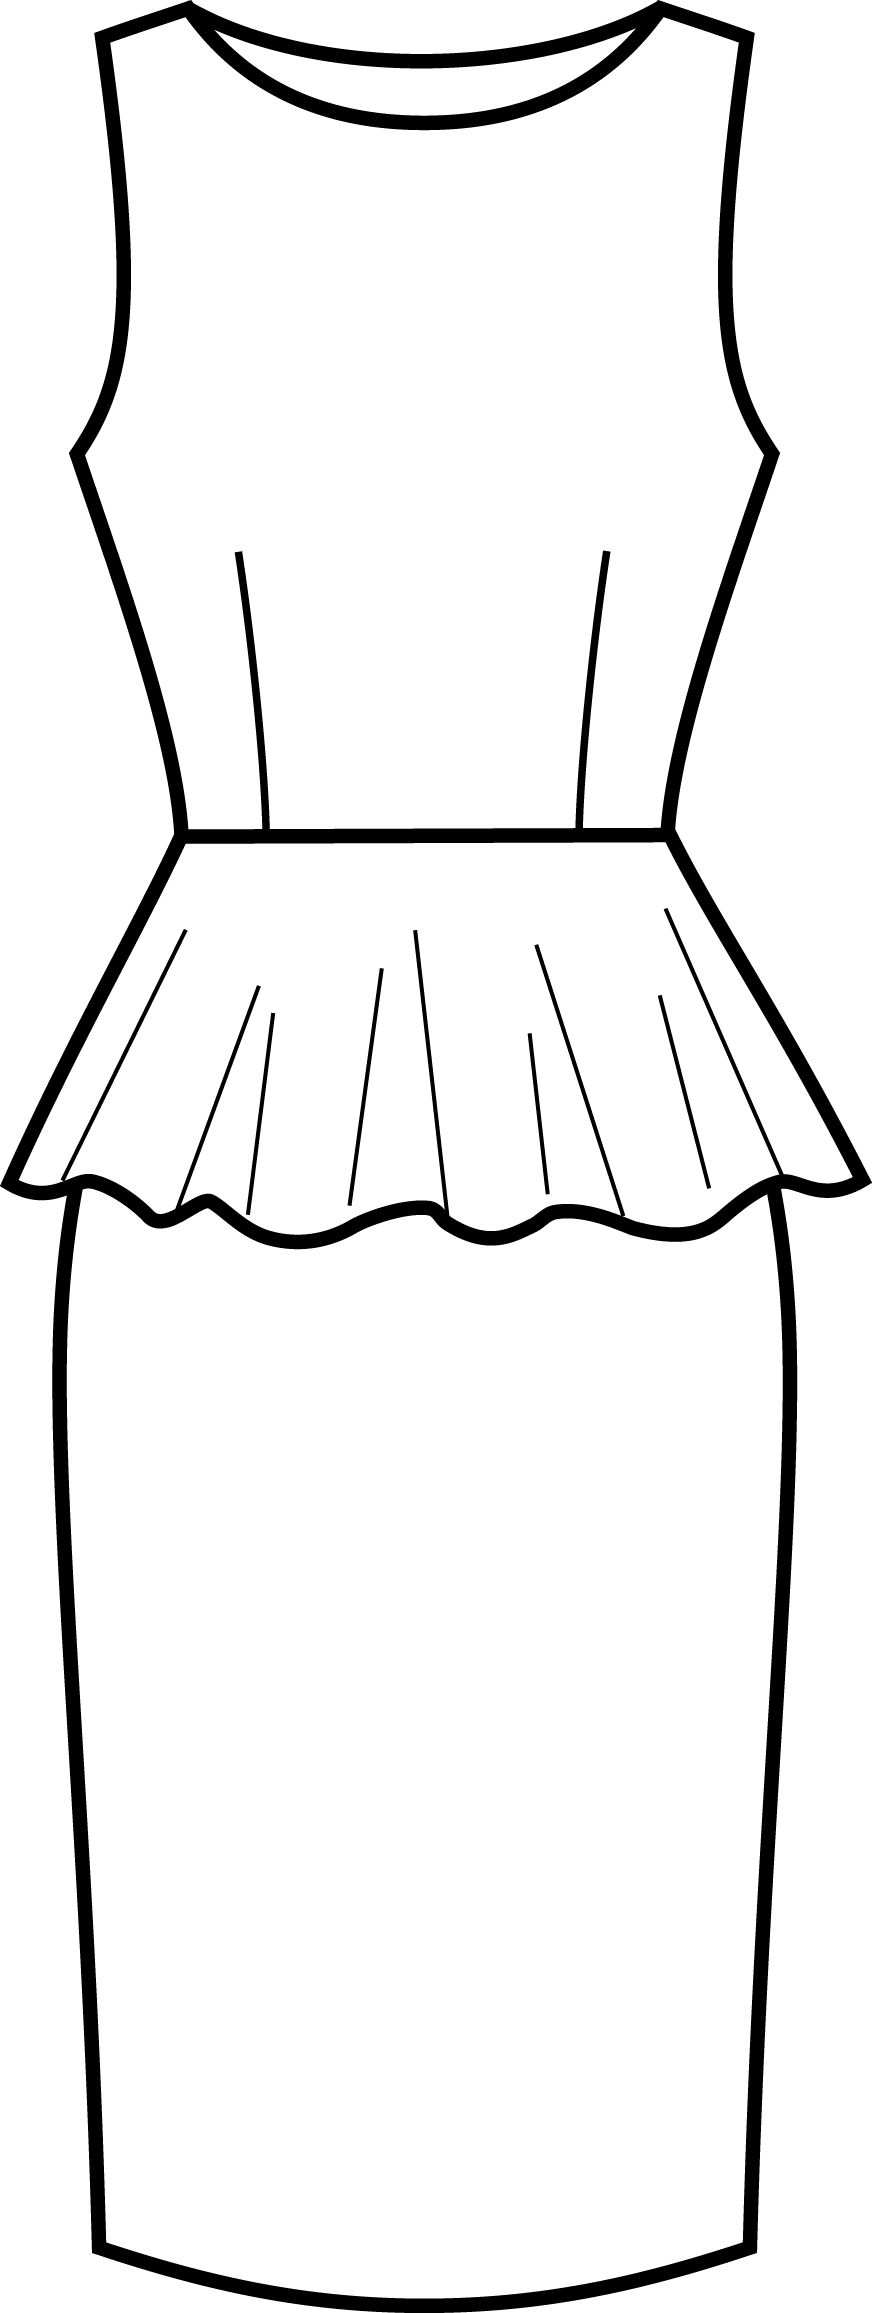 Peplum Style Dress